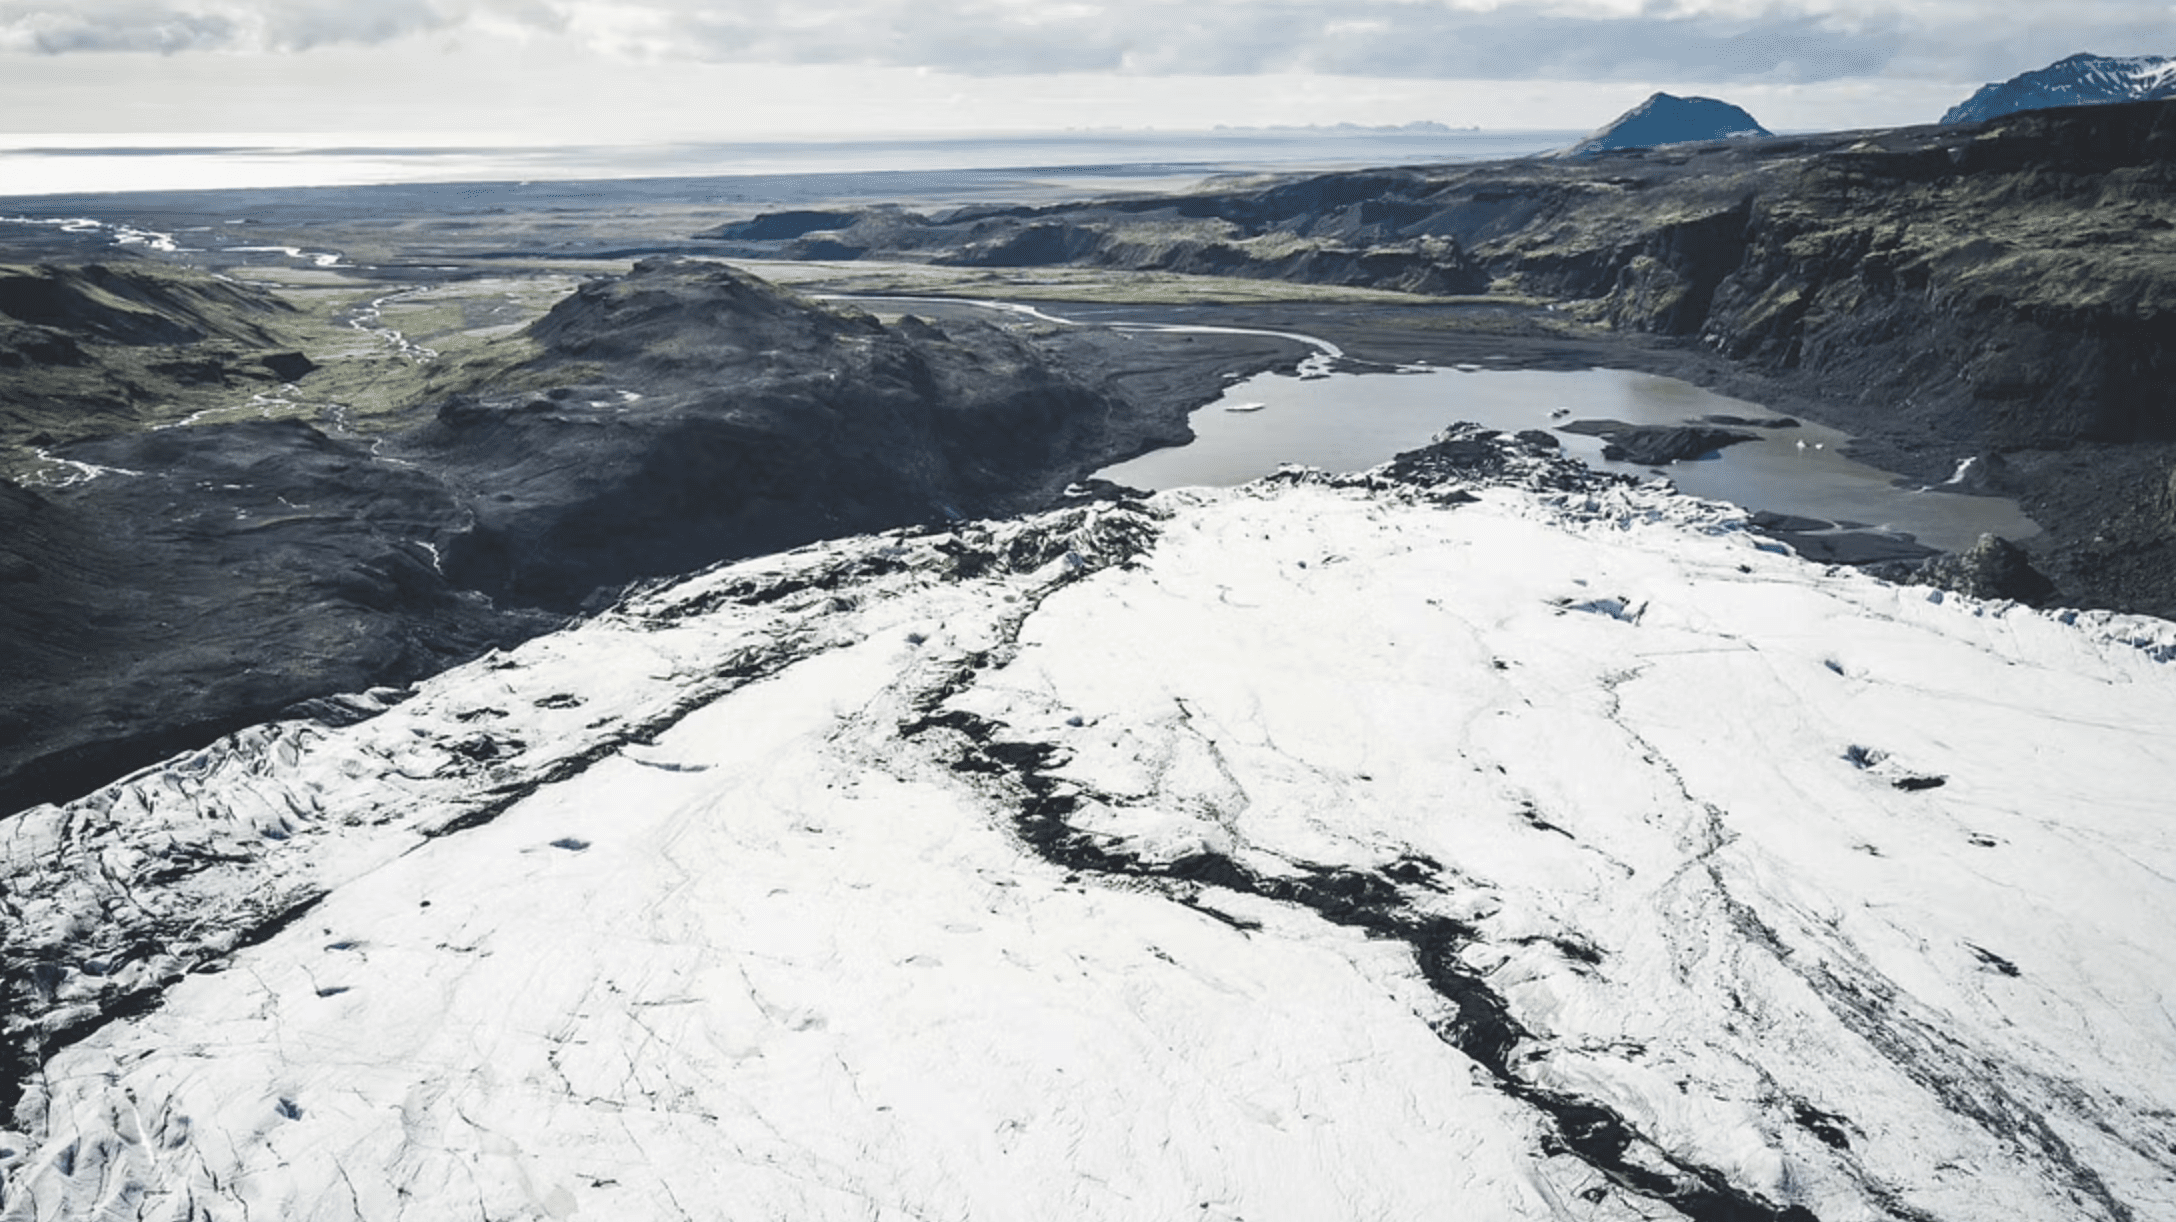 Sólheimajökull is a glacier in southern Iceland, between the volcanoes Katla and Eyjafjallajökull.